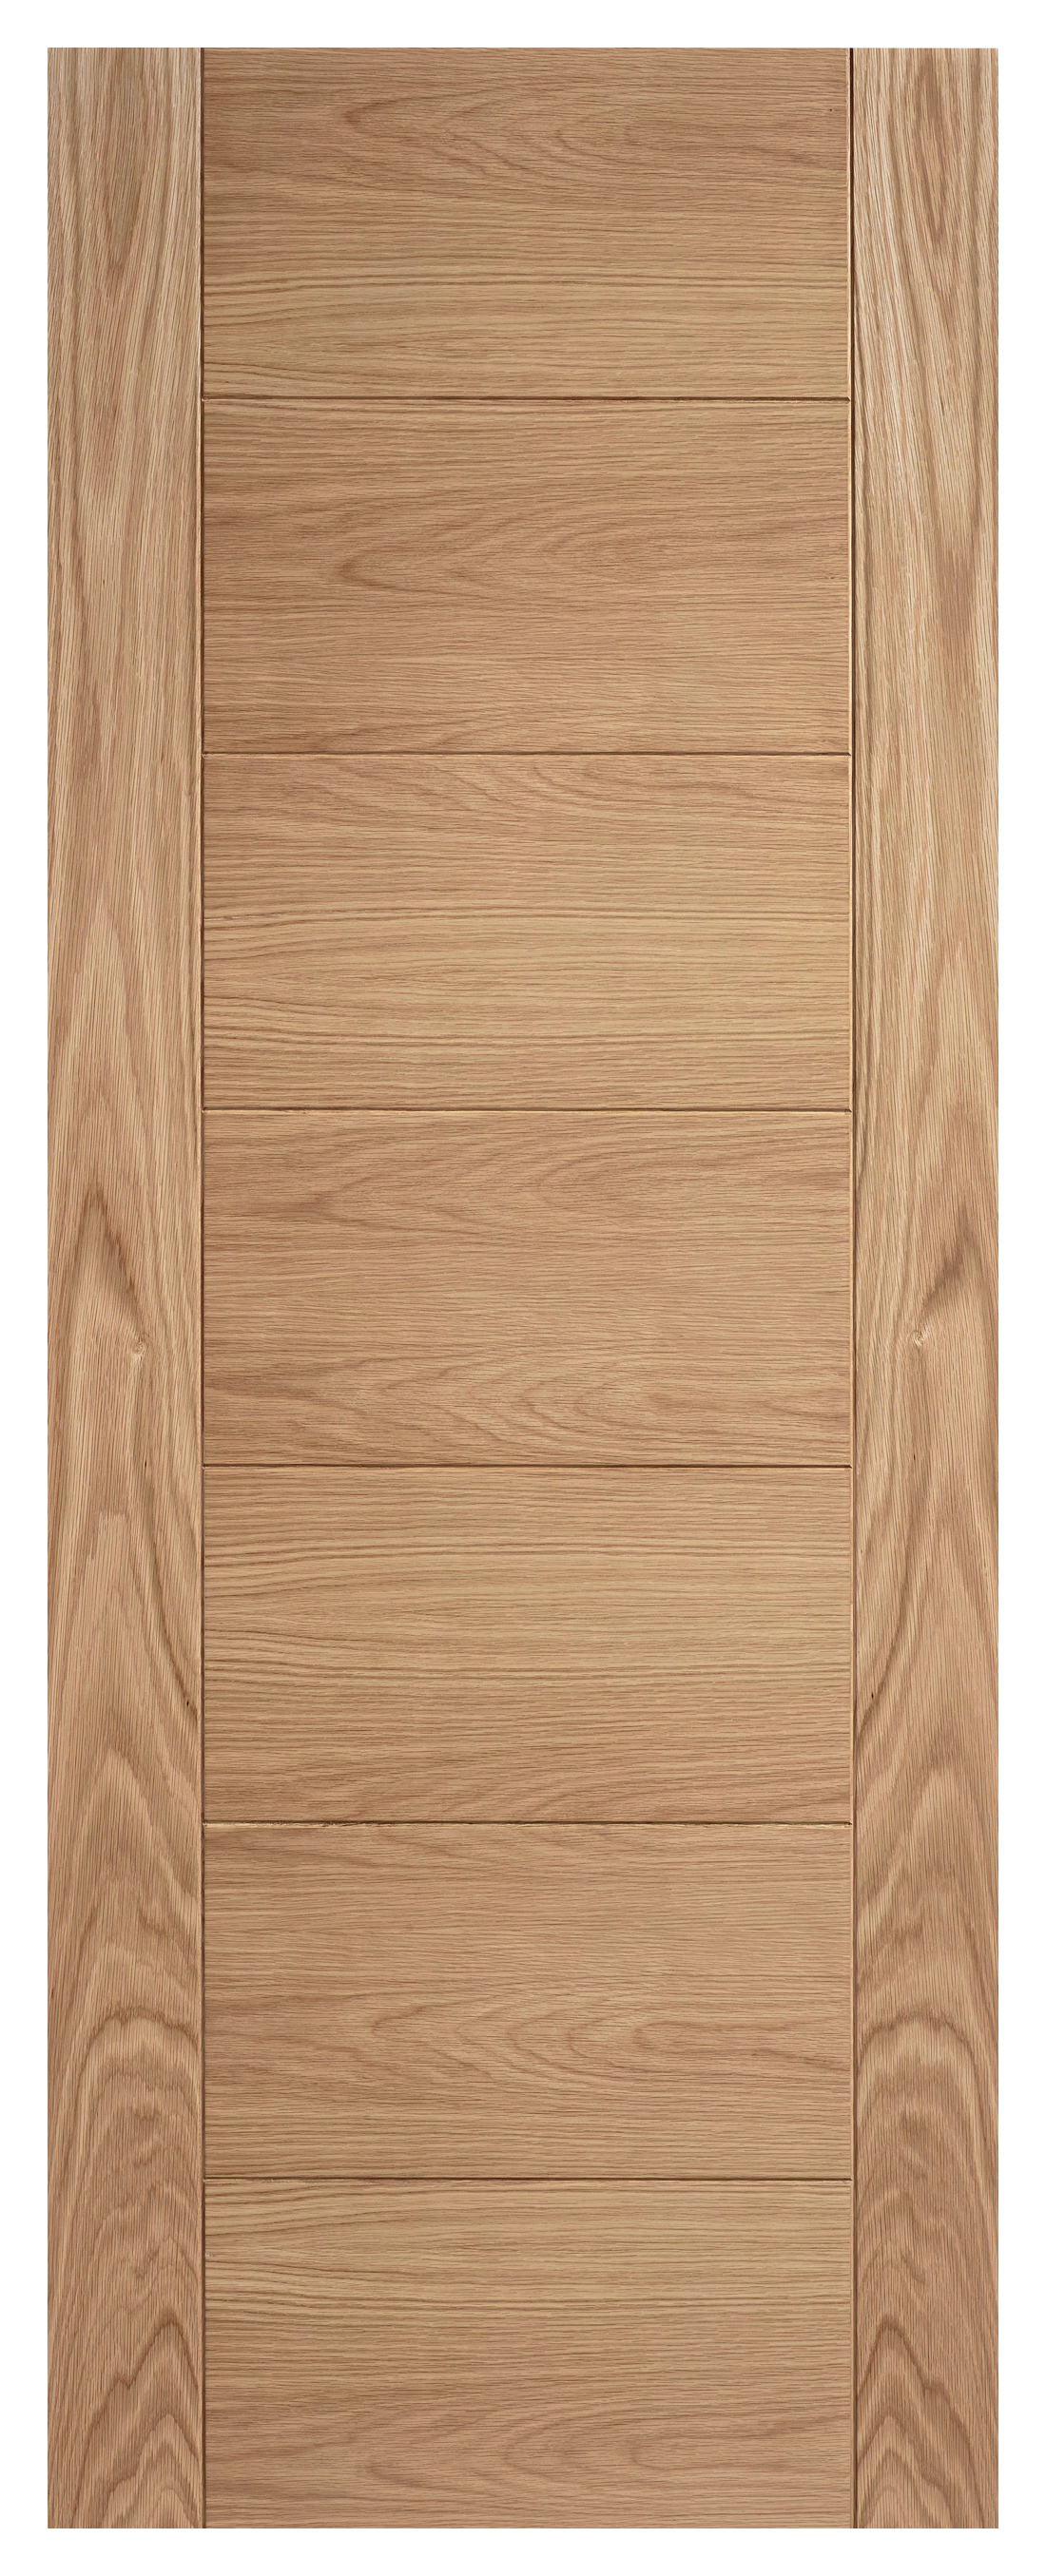 Image of LPD Internal Carini 7 Panel Pre-Finished Oak FD30 Fire Door - 762 x 198mm